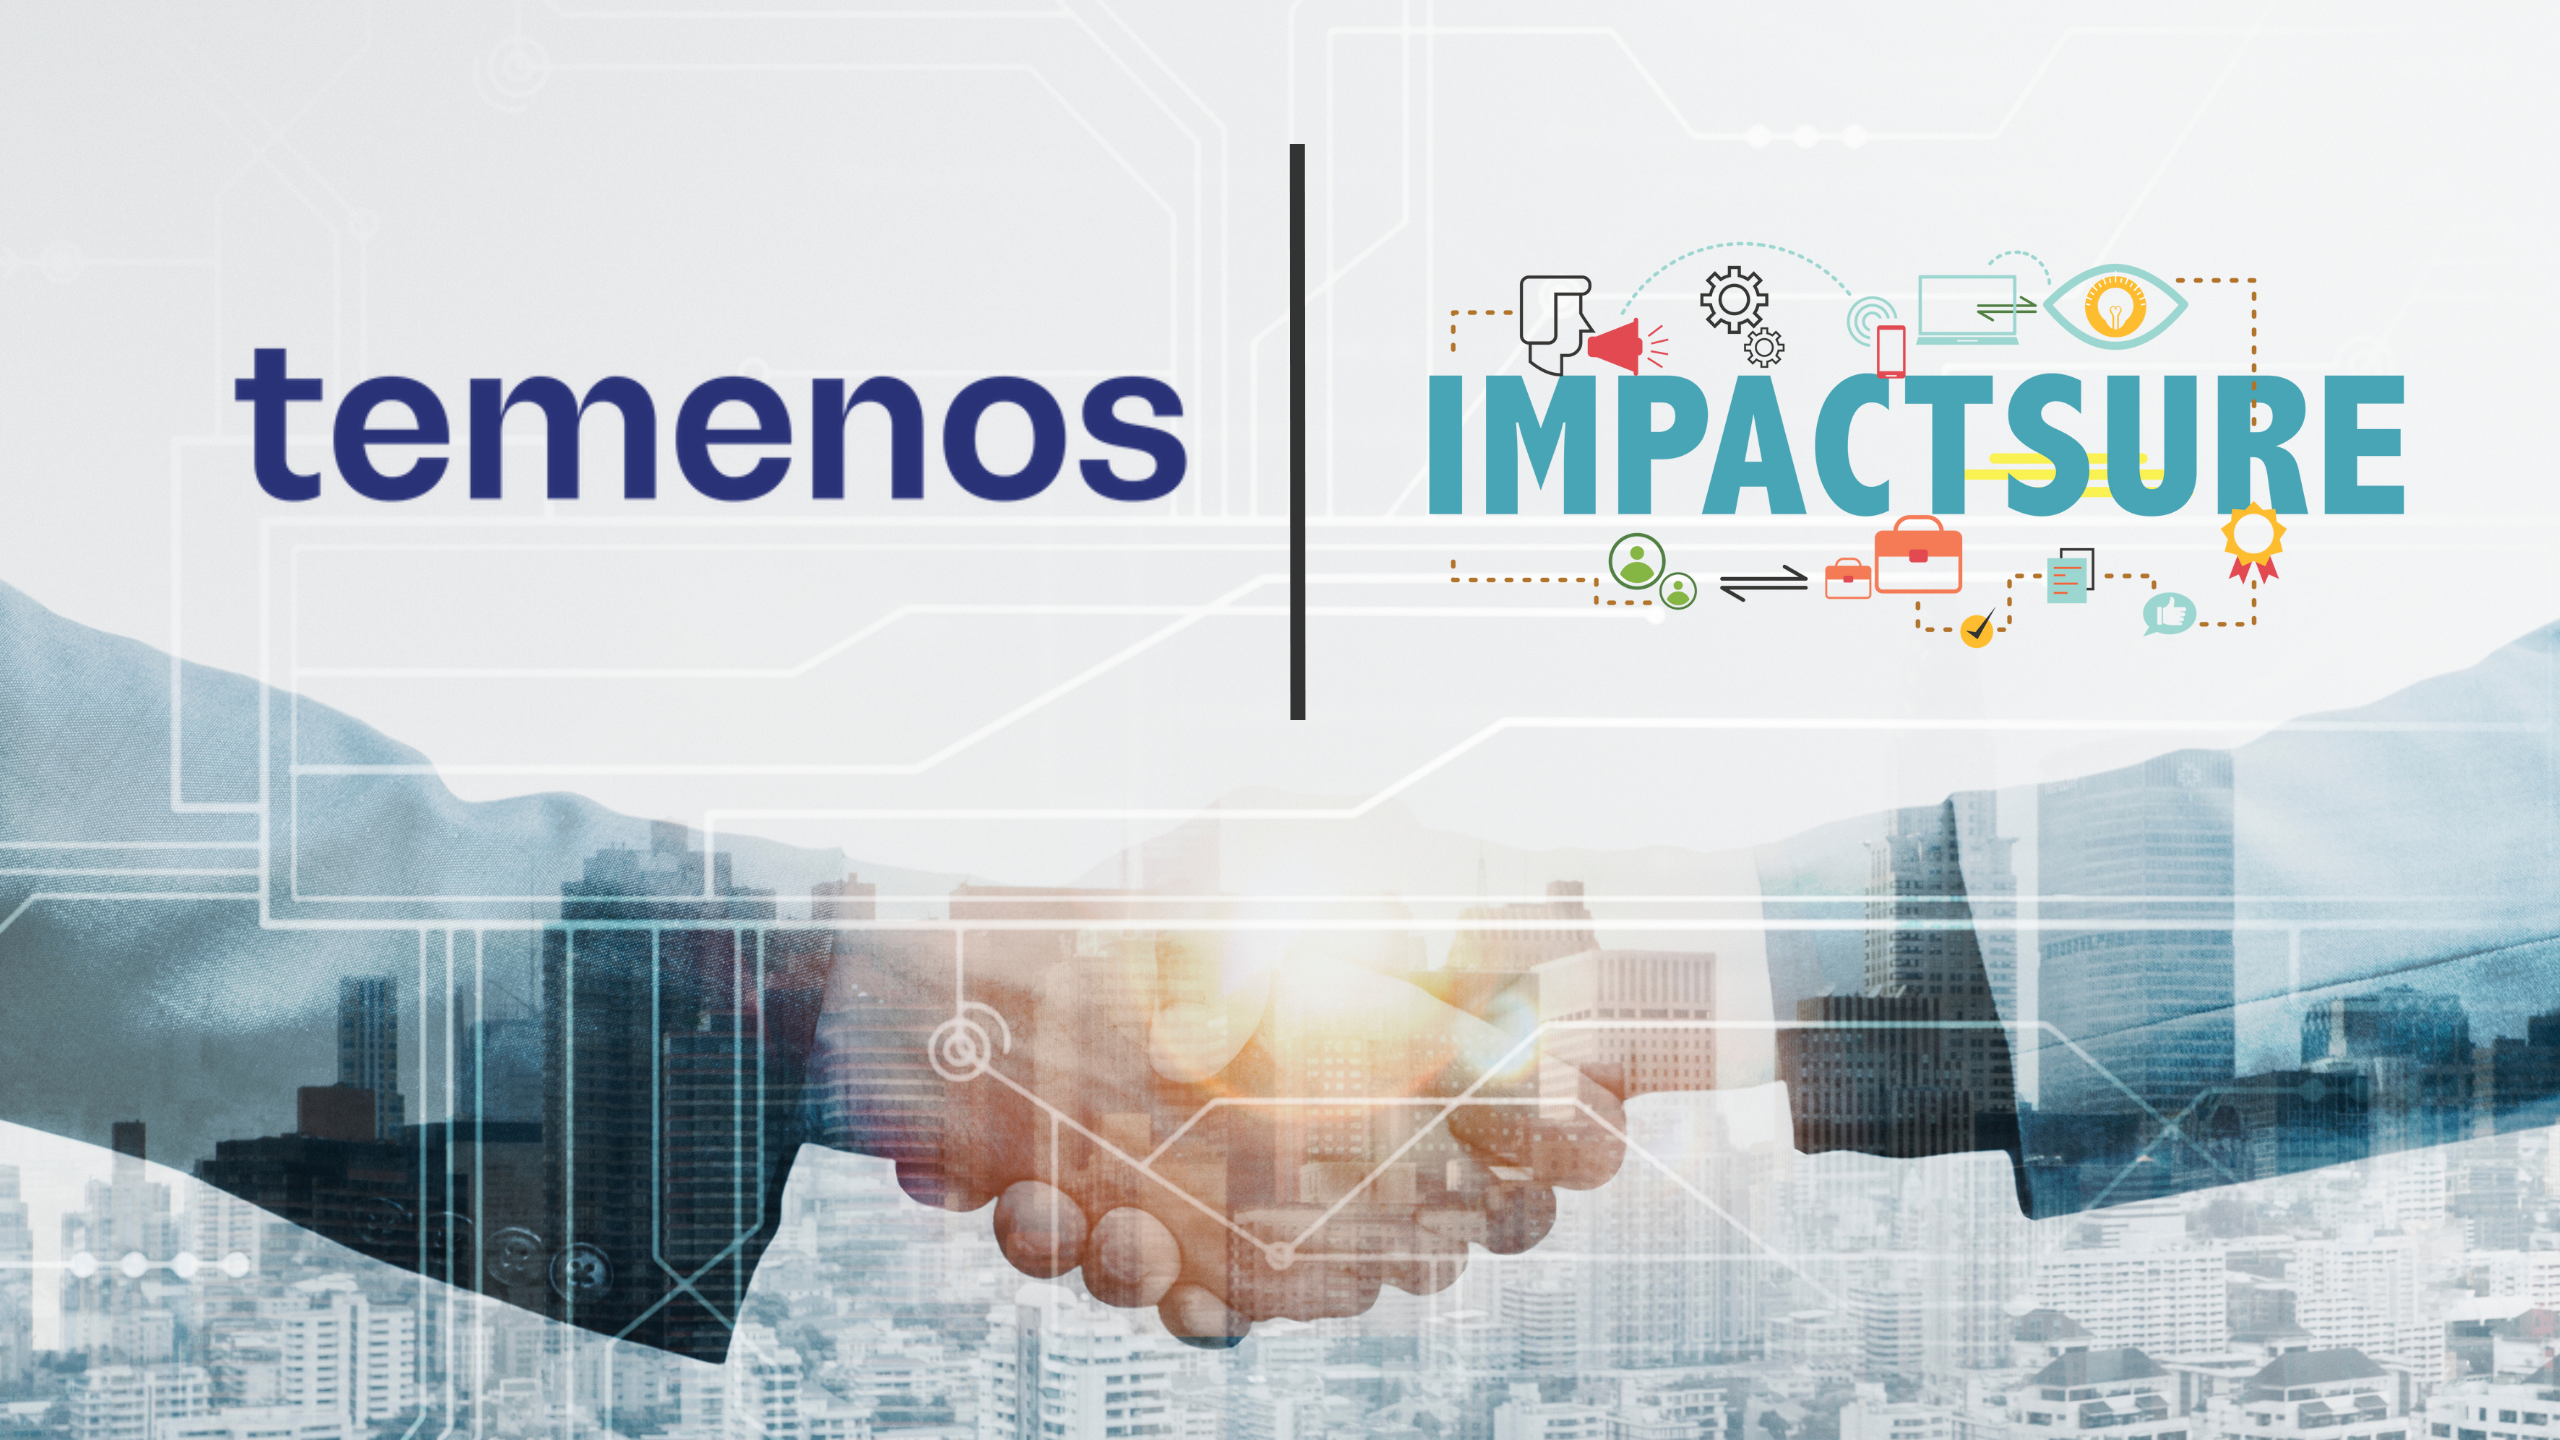 Impactsure is now available on Temenos Exchange